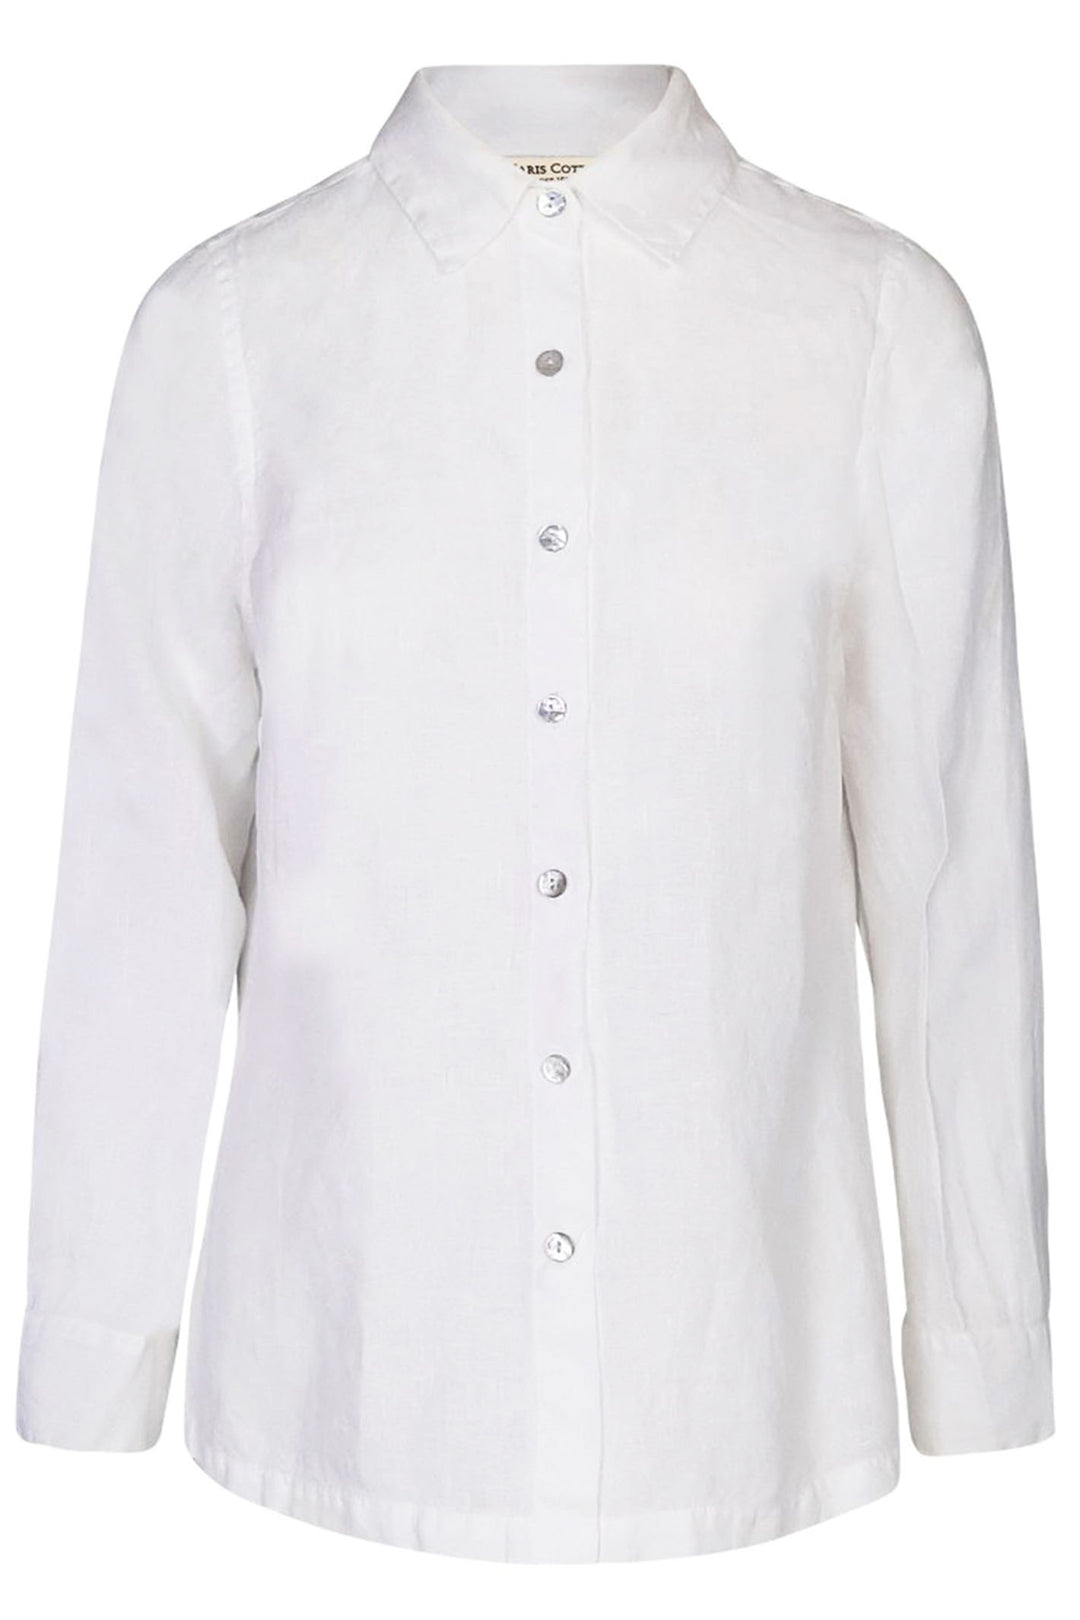 Haris Cotton 8007 White Long Sleeve Linen Shirt - Shirley Allum Boutique